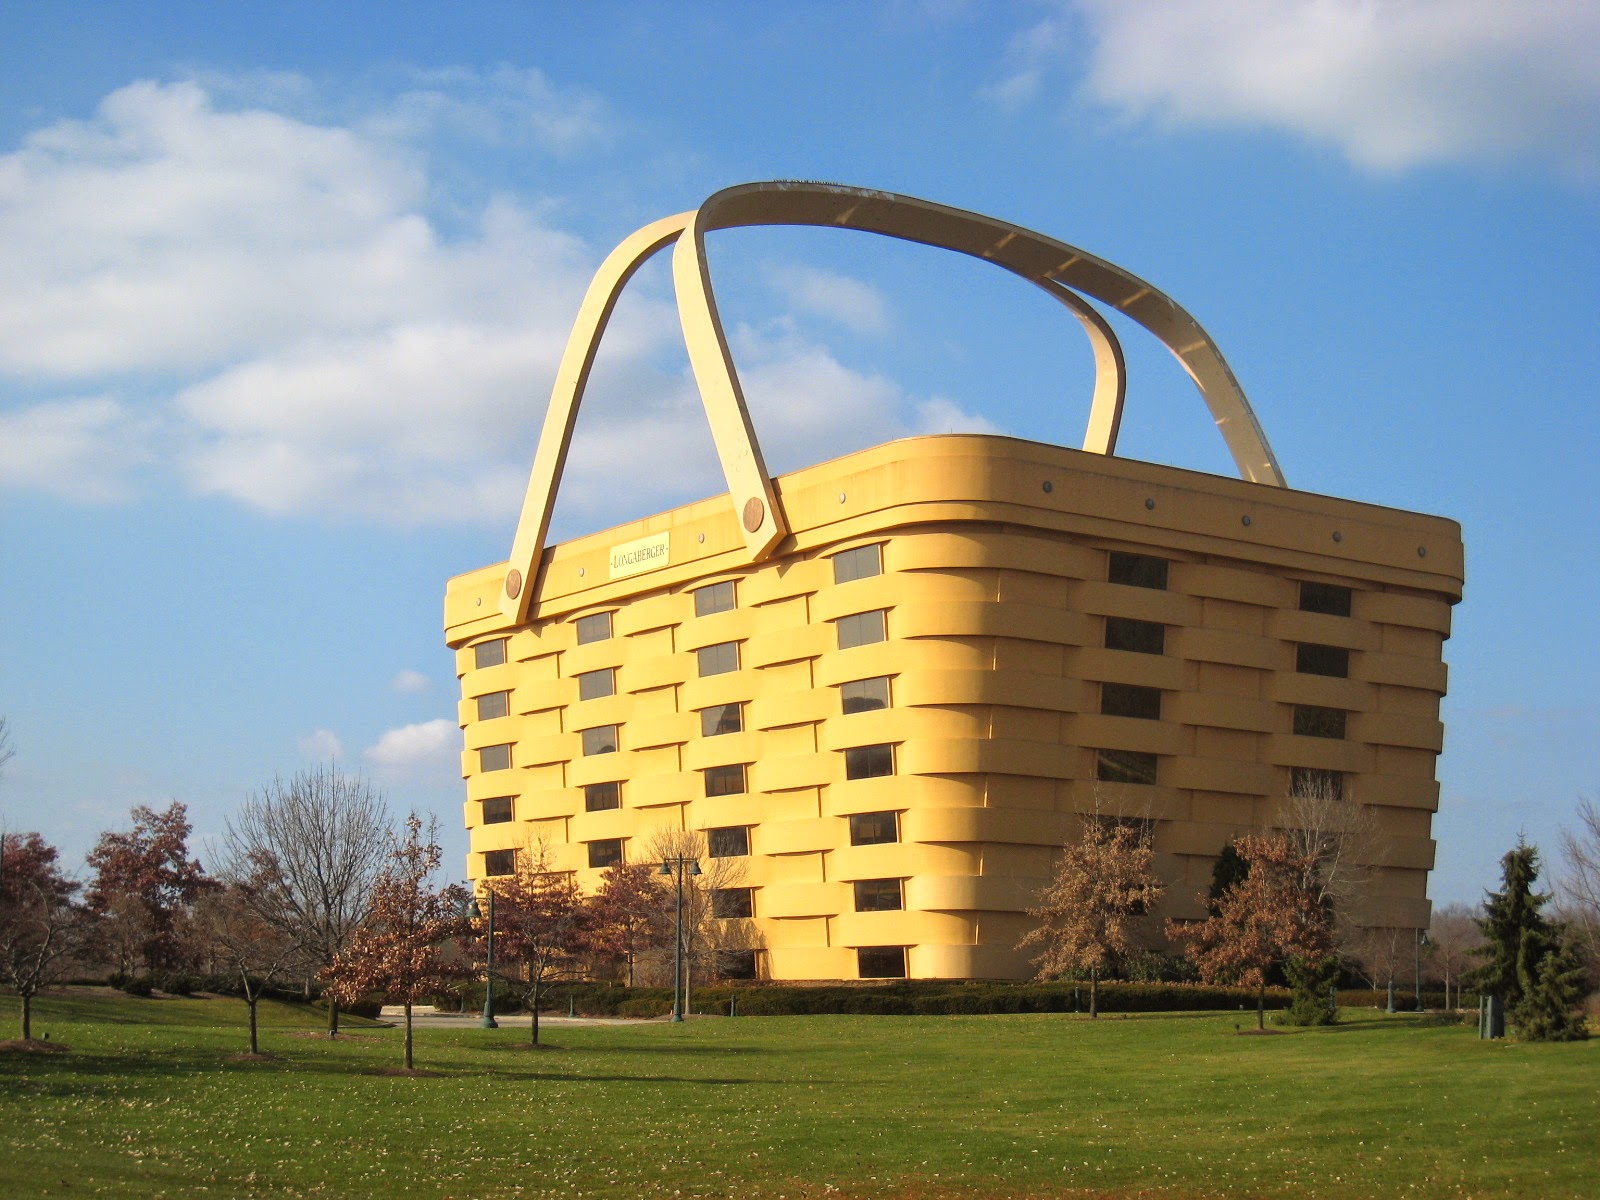 Unique buildings. Здание-корзина (the Basket building), Огайо, США. Дом-корзина (Ньюарк, штат Огайо, США). Здание корзина штат Огайо США. Дом «корзина», штат Огайо, США..